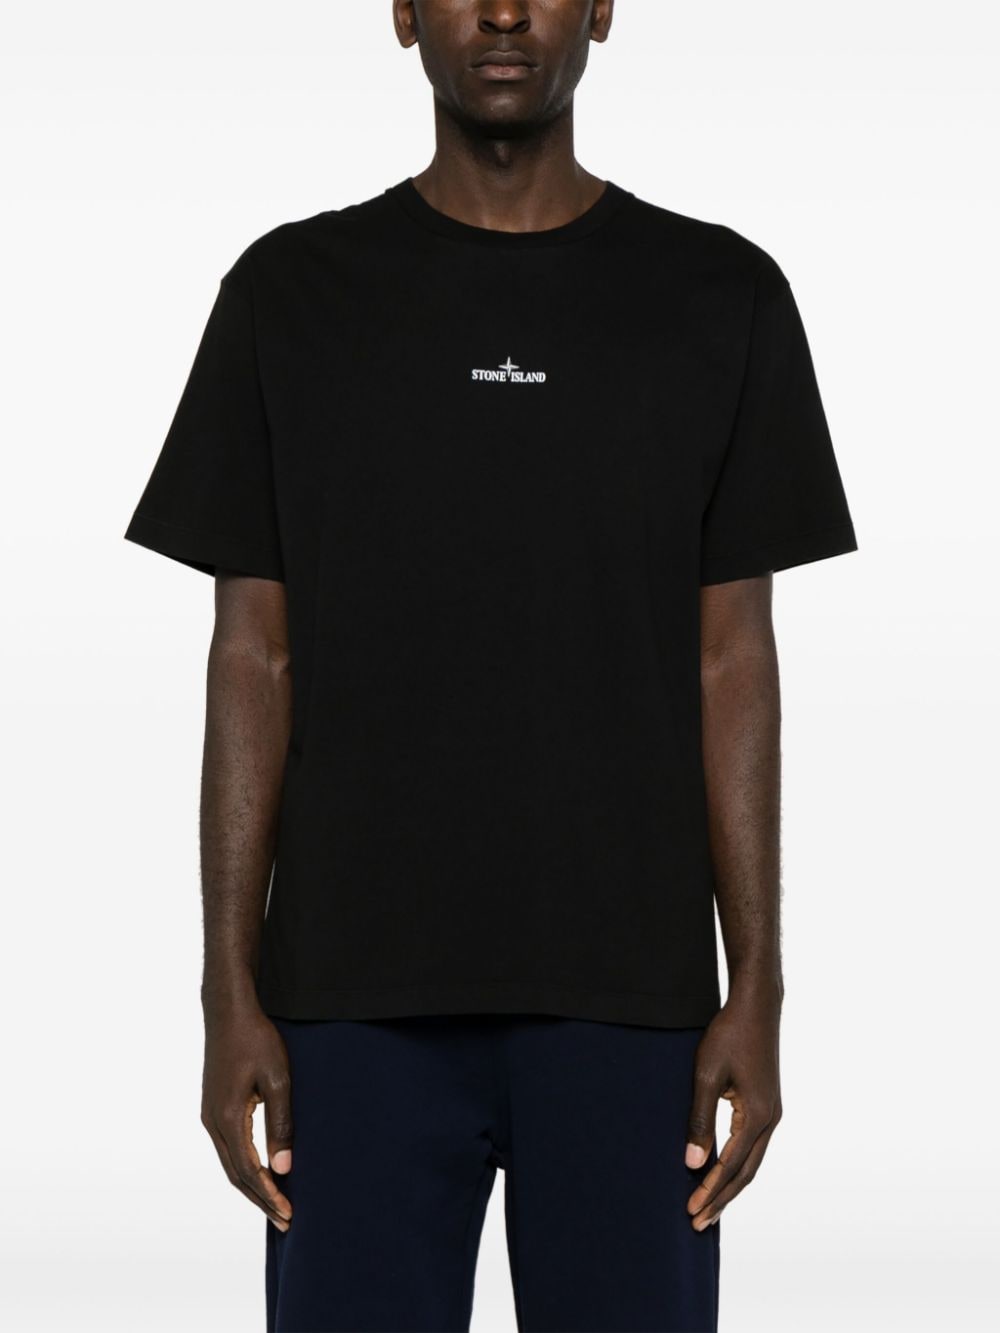 Black logo-print cotton T-shirt<BR/><BR/><BR/>